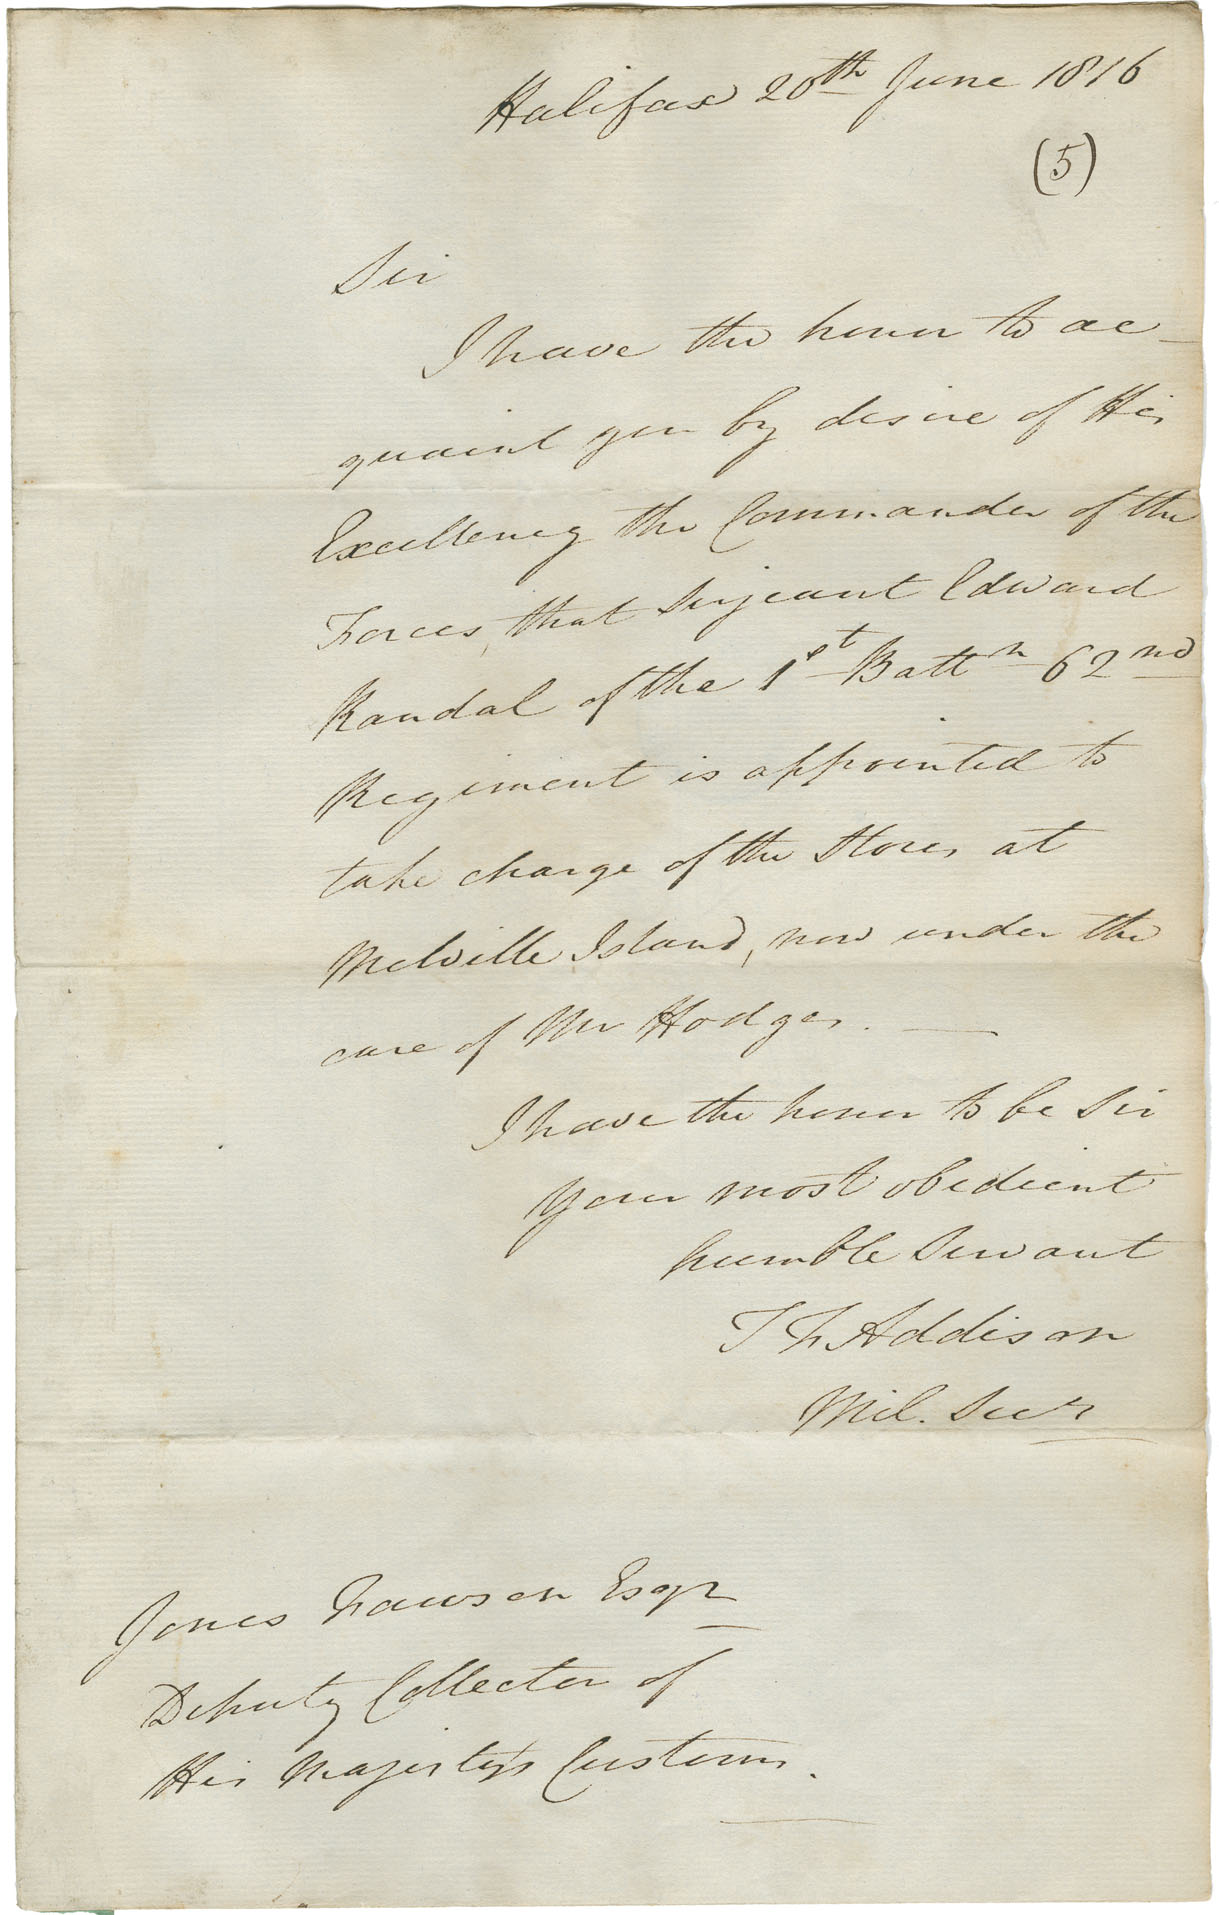 Letter to Jones Fawson from Mr. Addison, Military Secretary, regarding supplies for Black Refugees